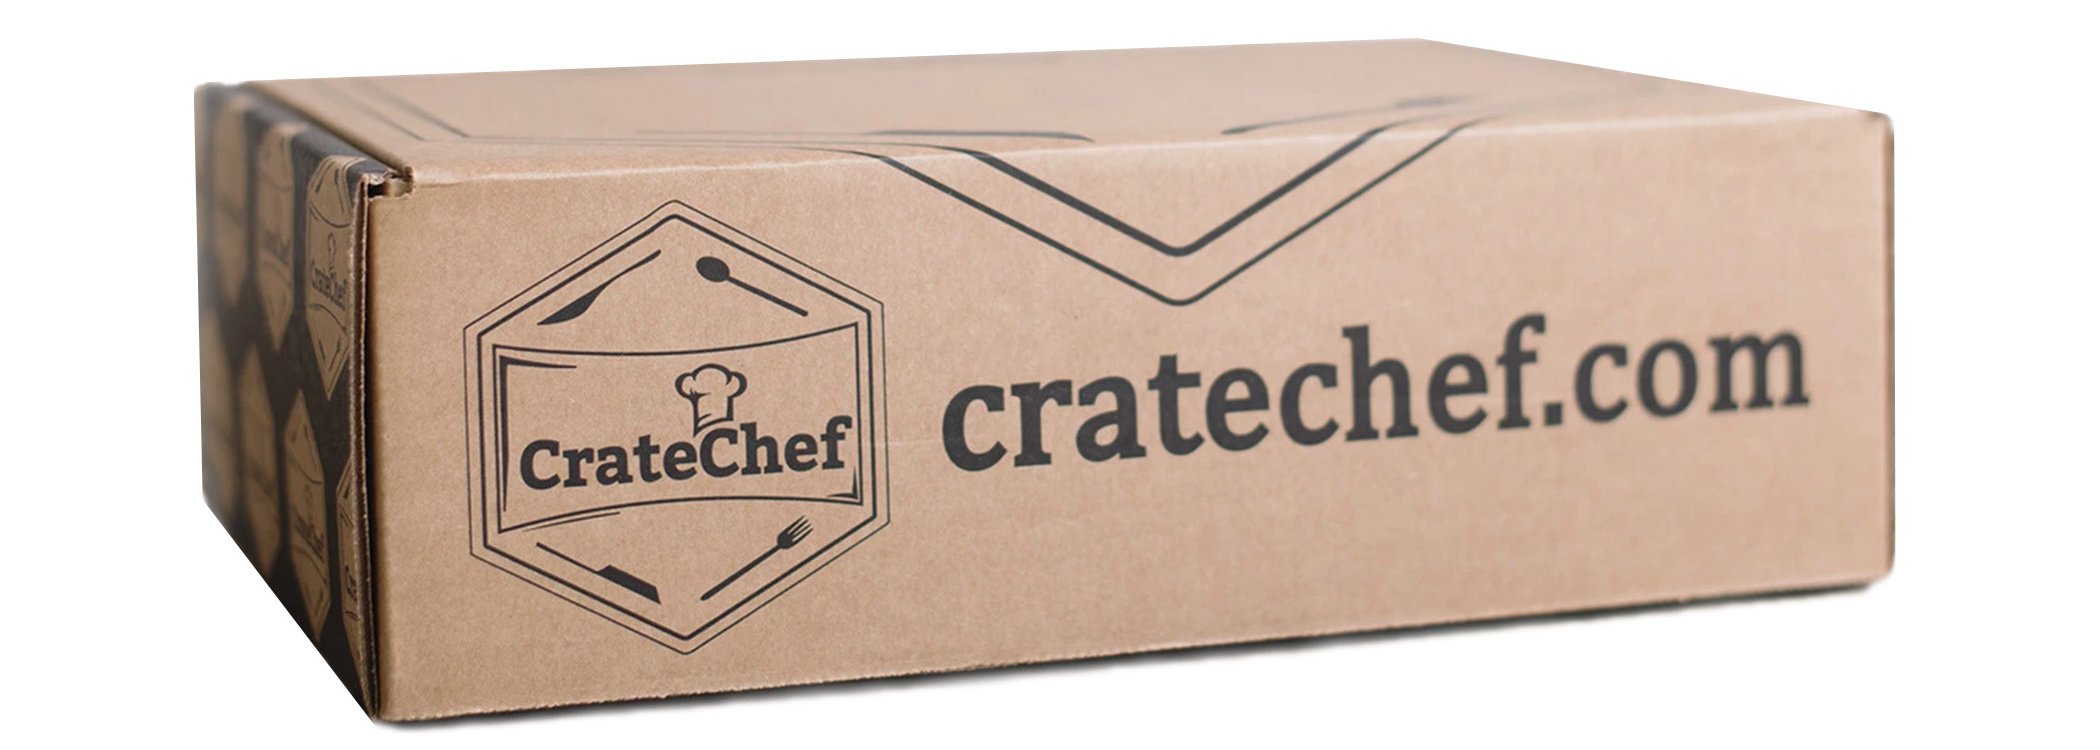 CrateChef Shipping Box